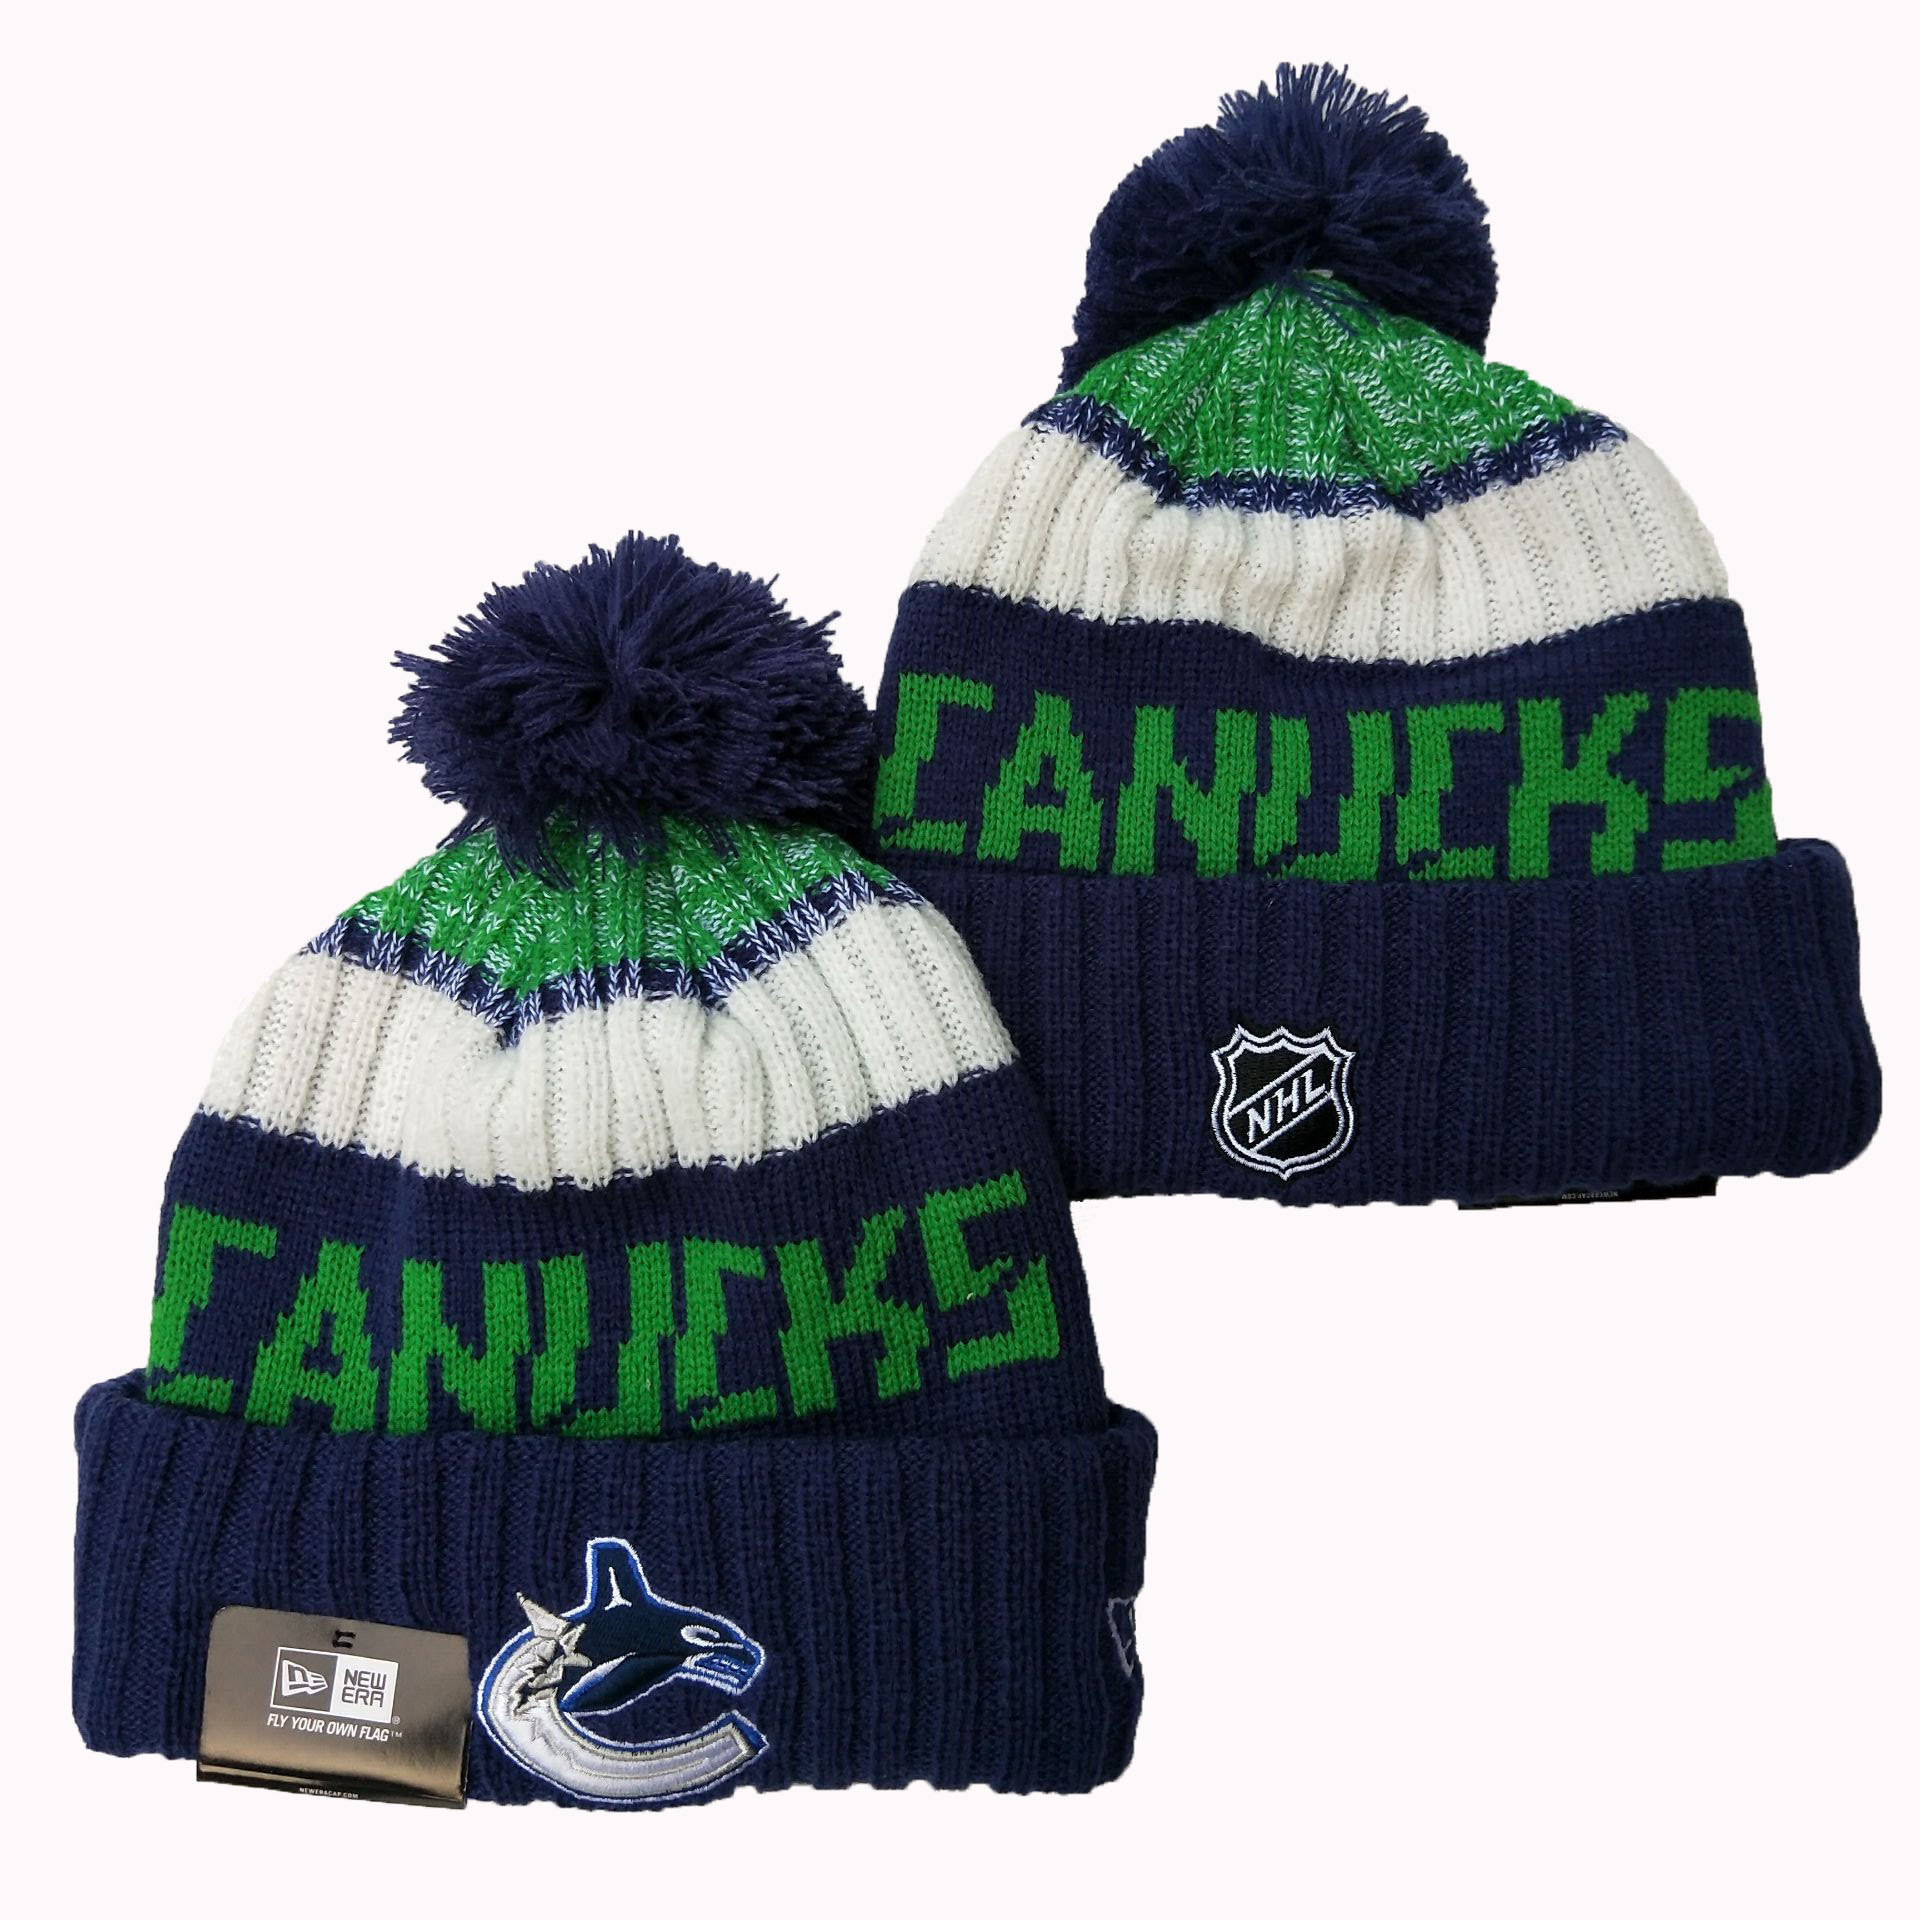 Vancouver Canucks Knit Hats -2